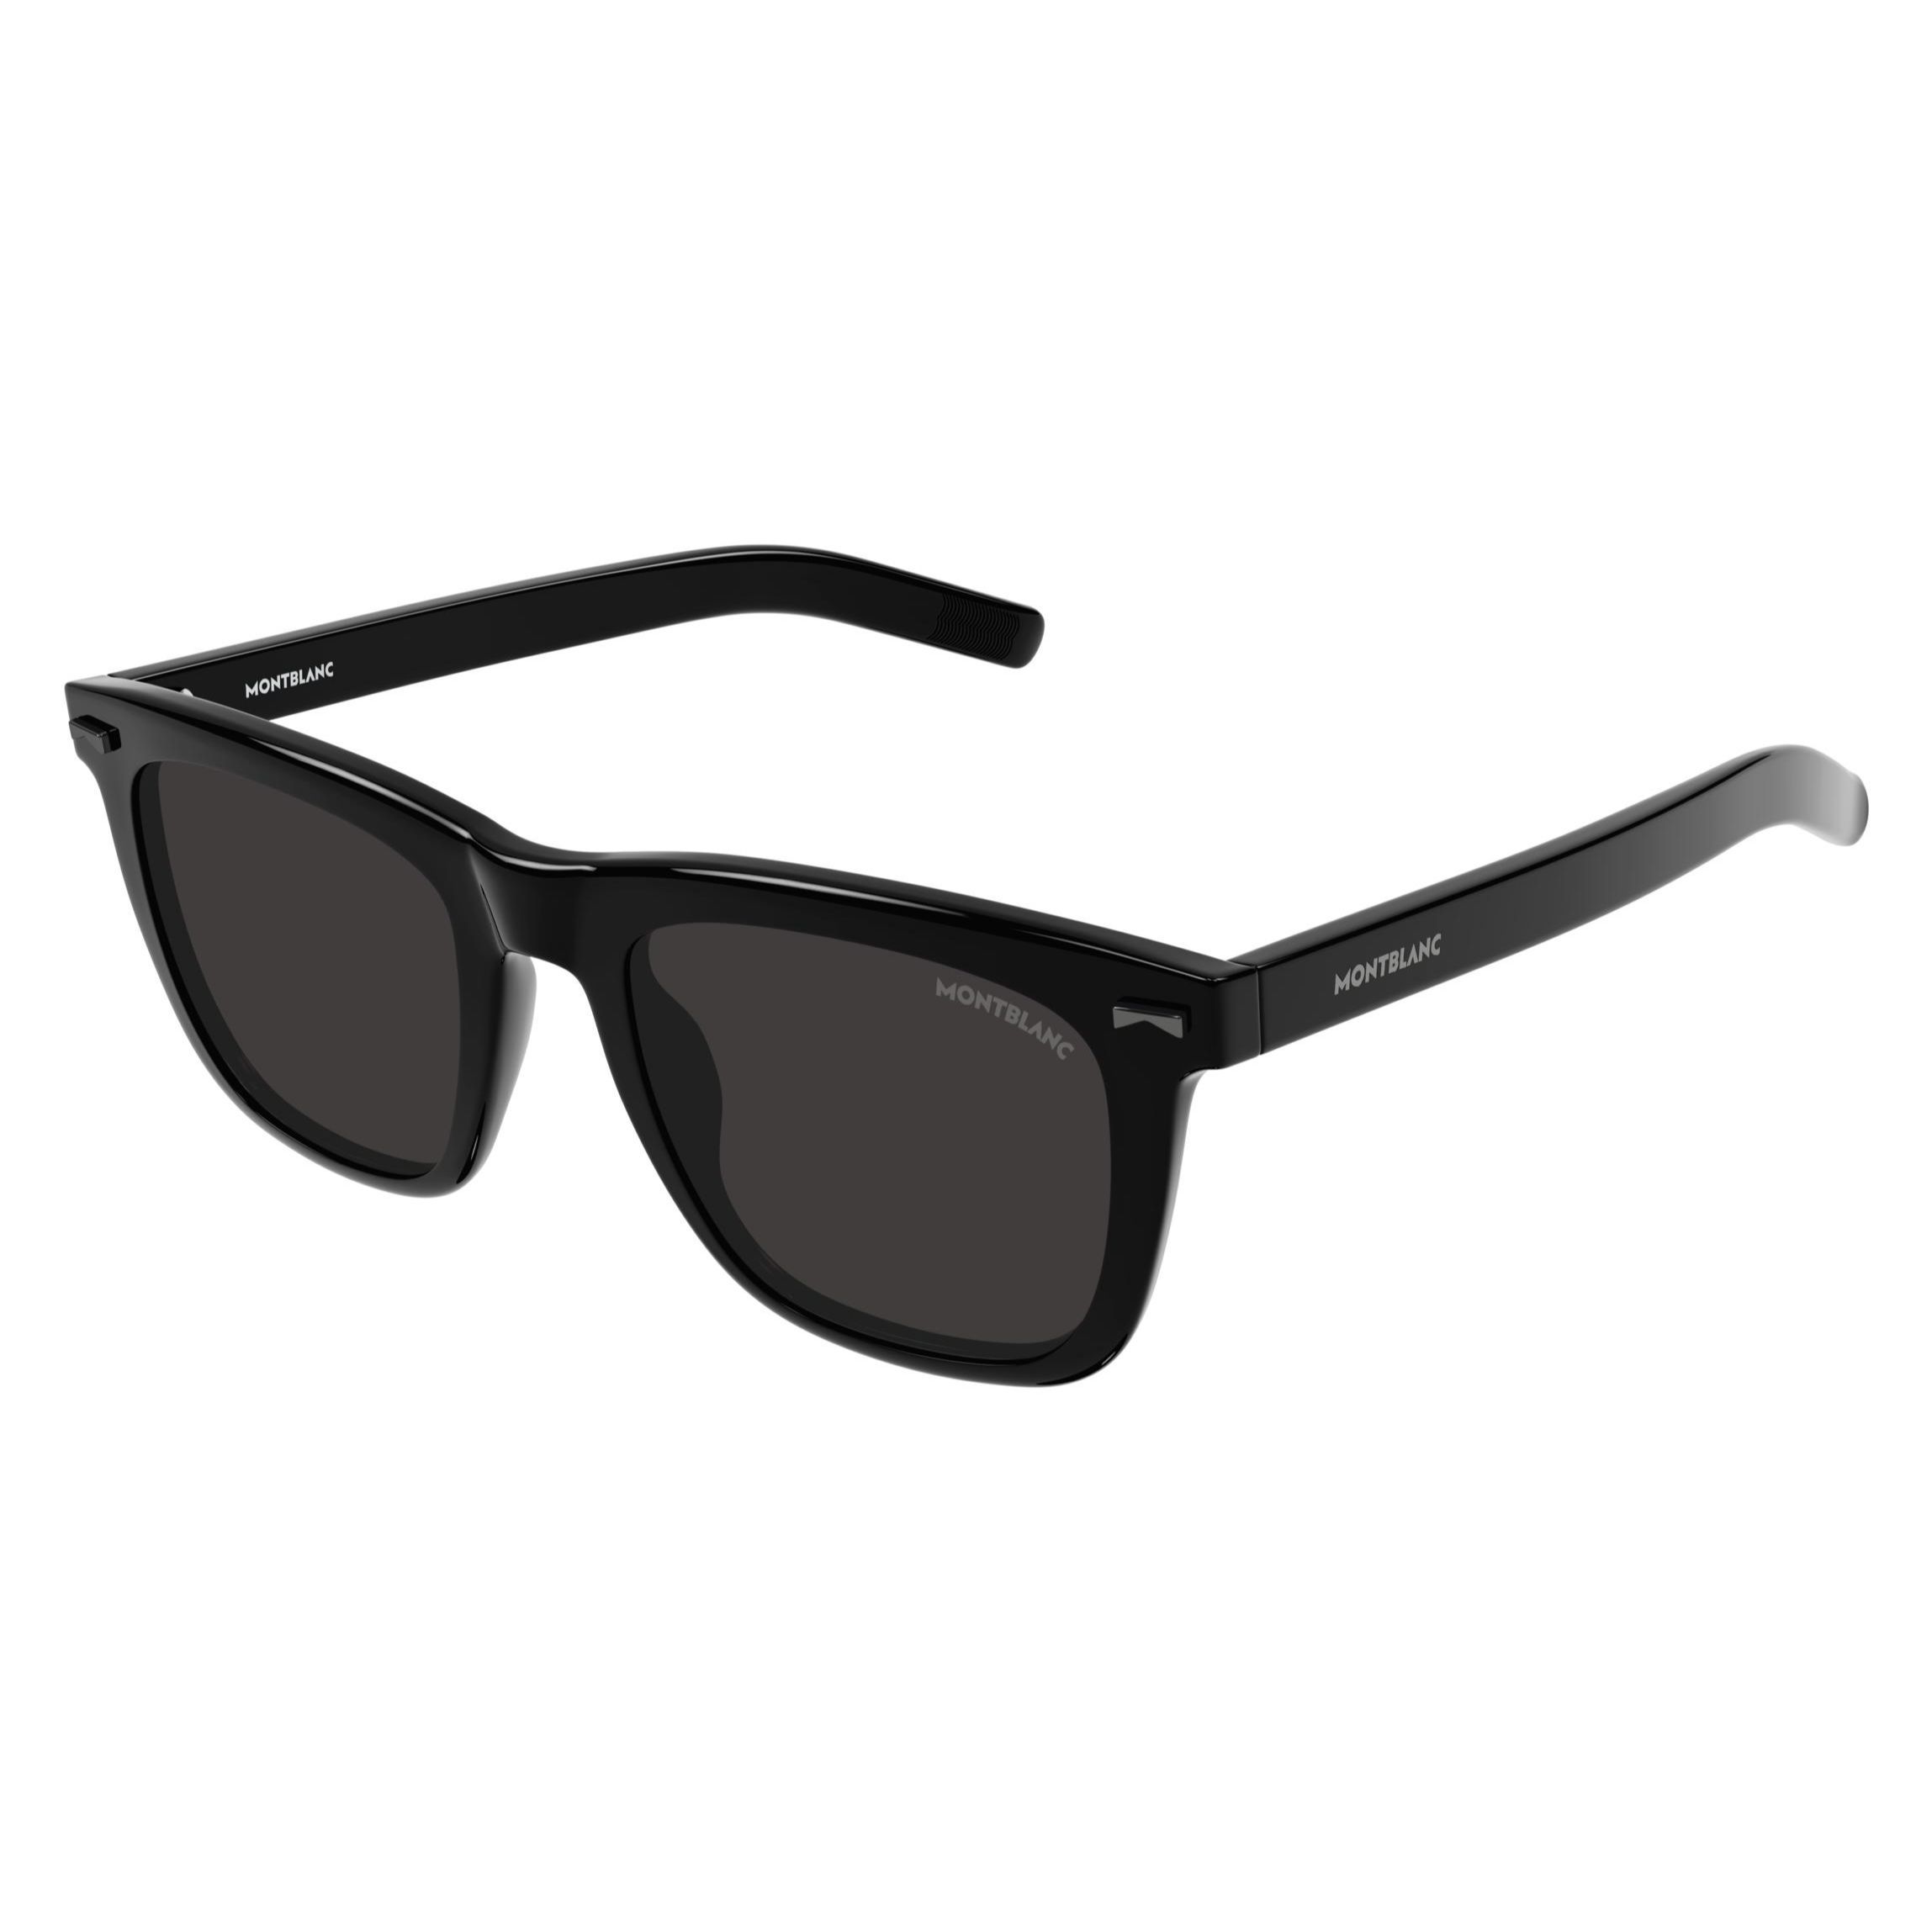 MB0226S Square Sunglasses 001 - size 53